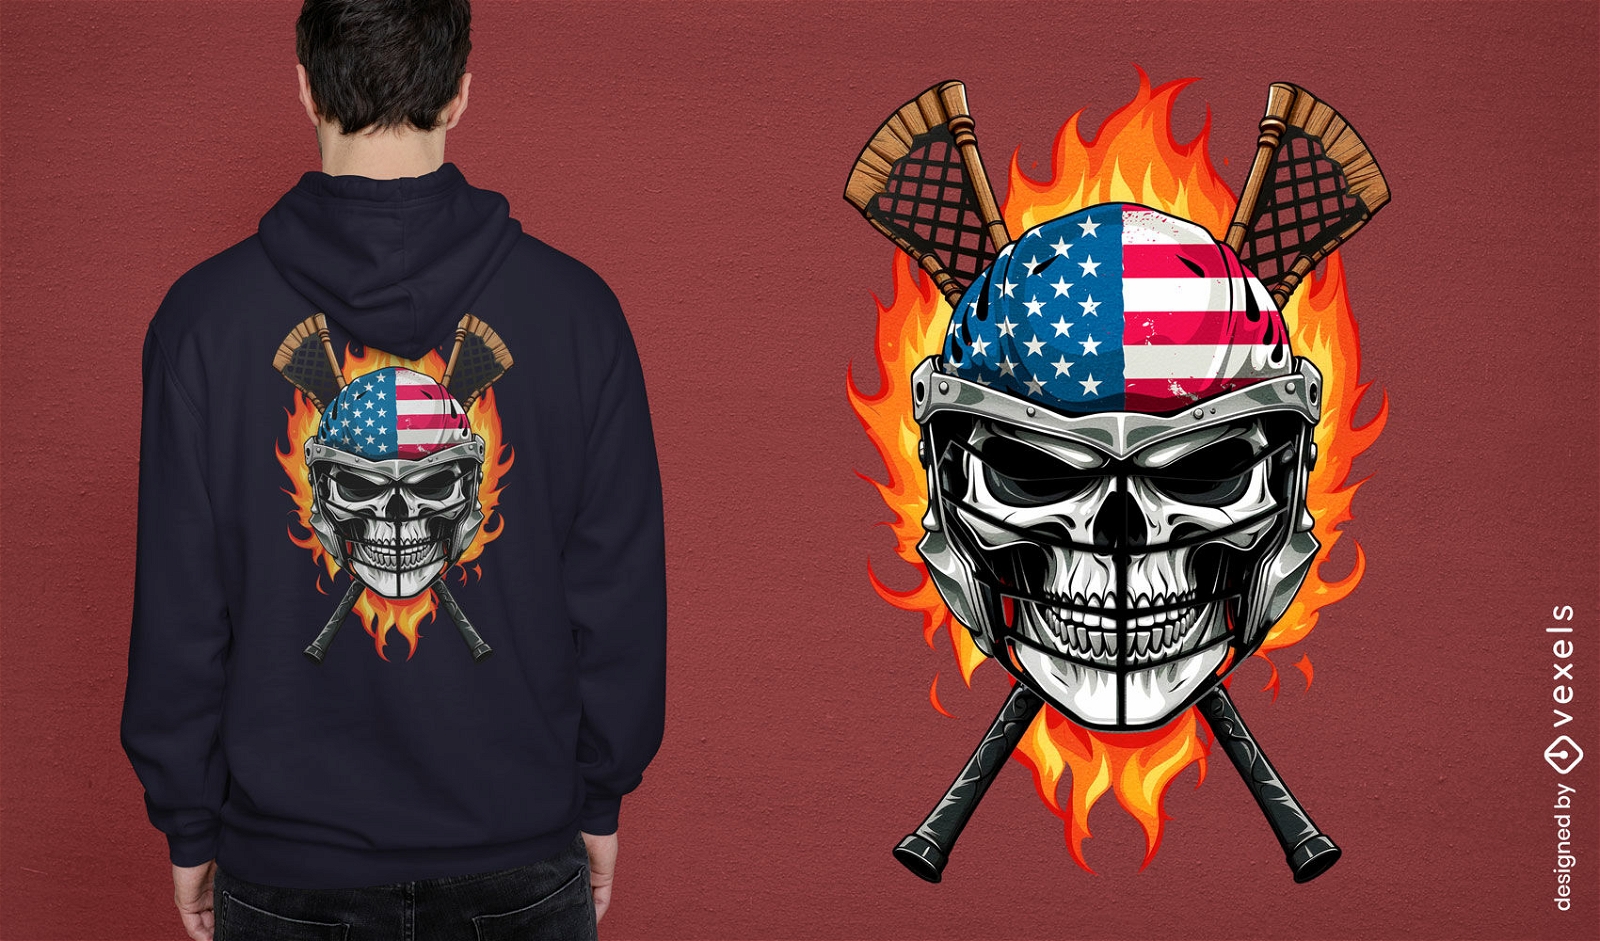 Patriotic lacrosse skull t-shirt design